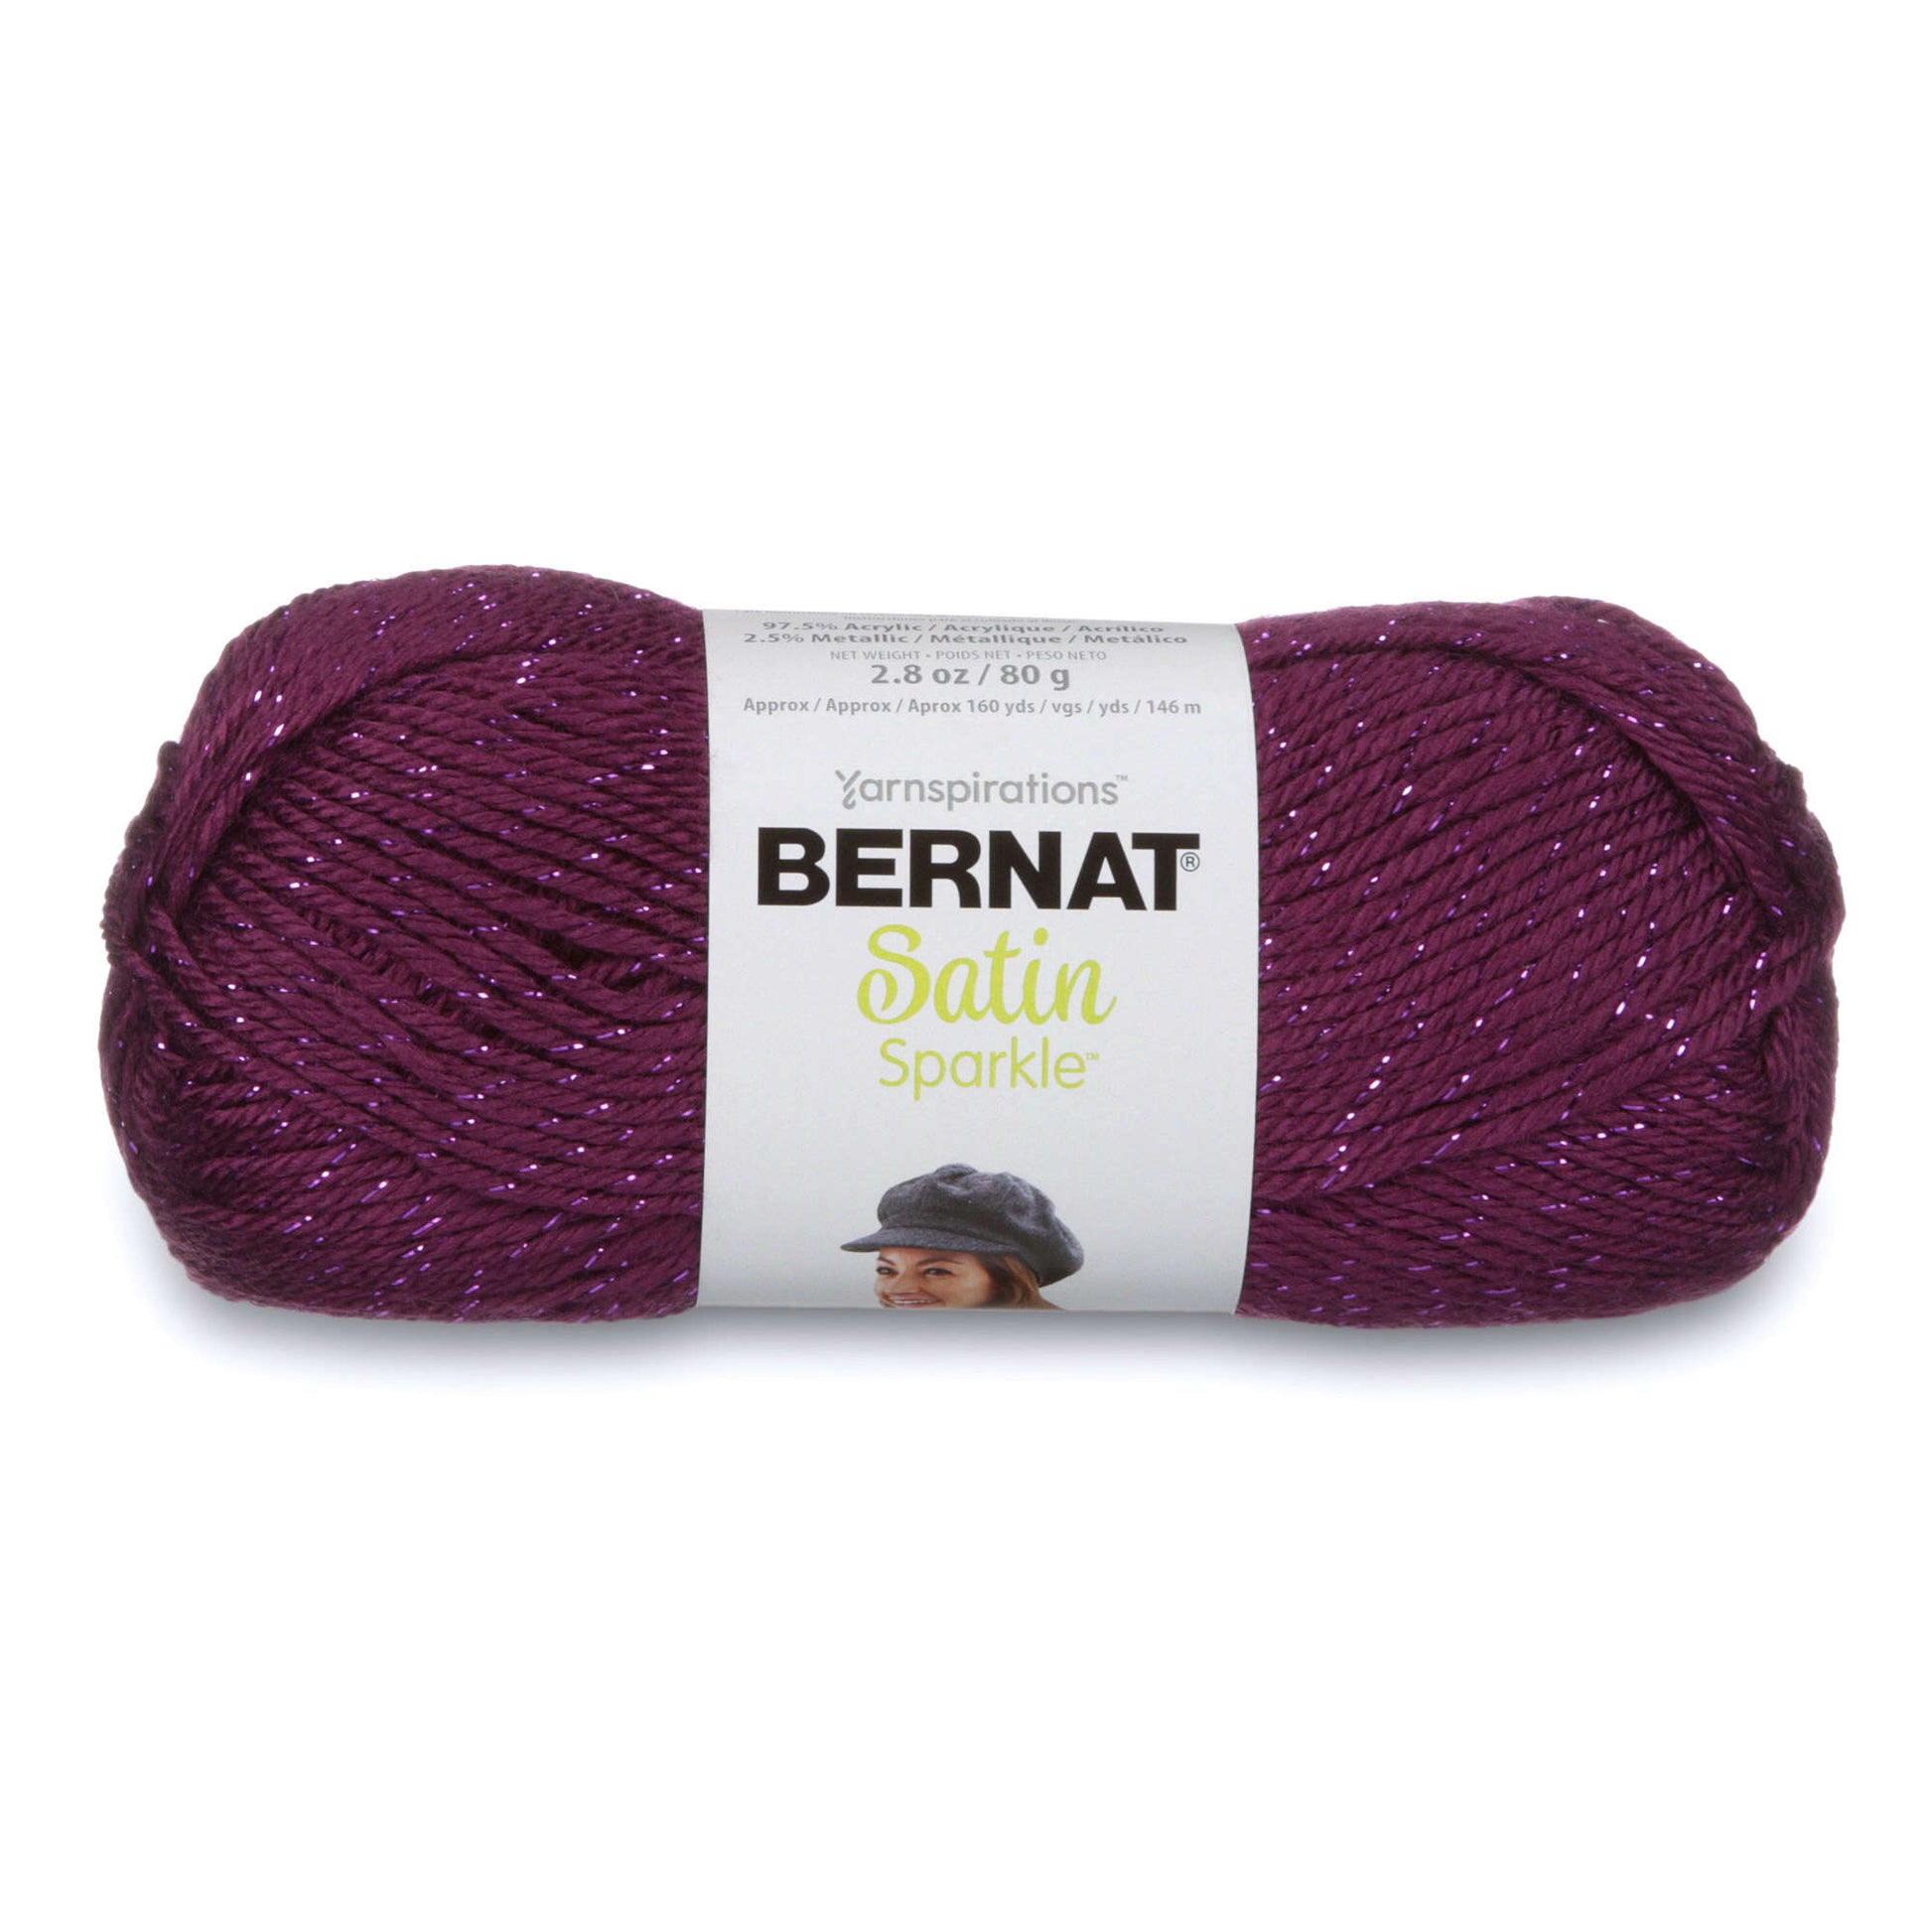 Bernat Satin Sparkle Yarn - Discontinued shades